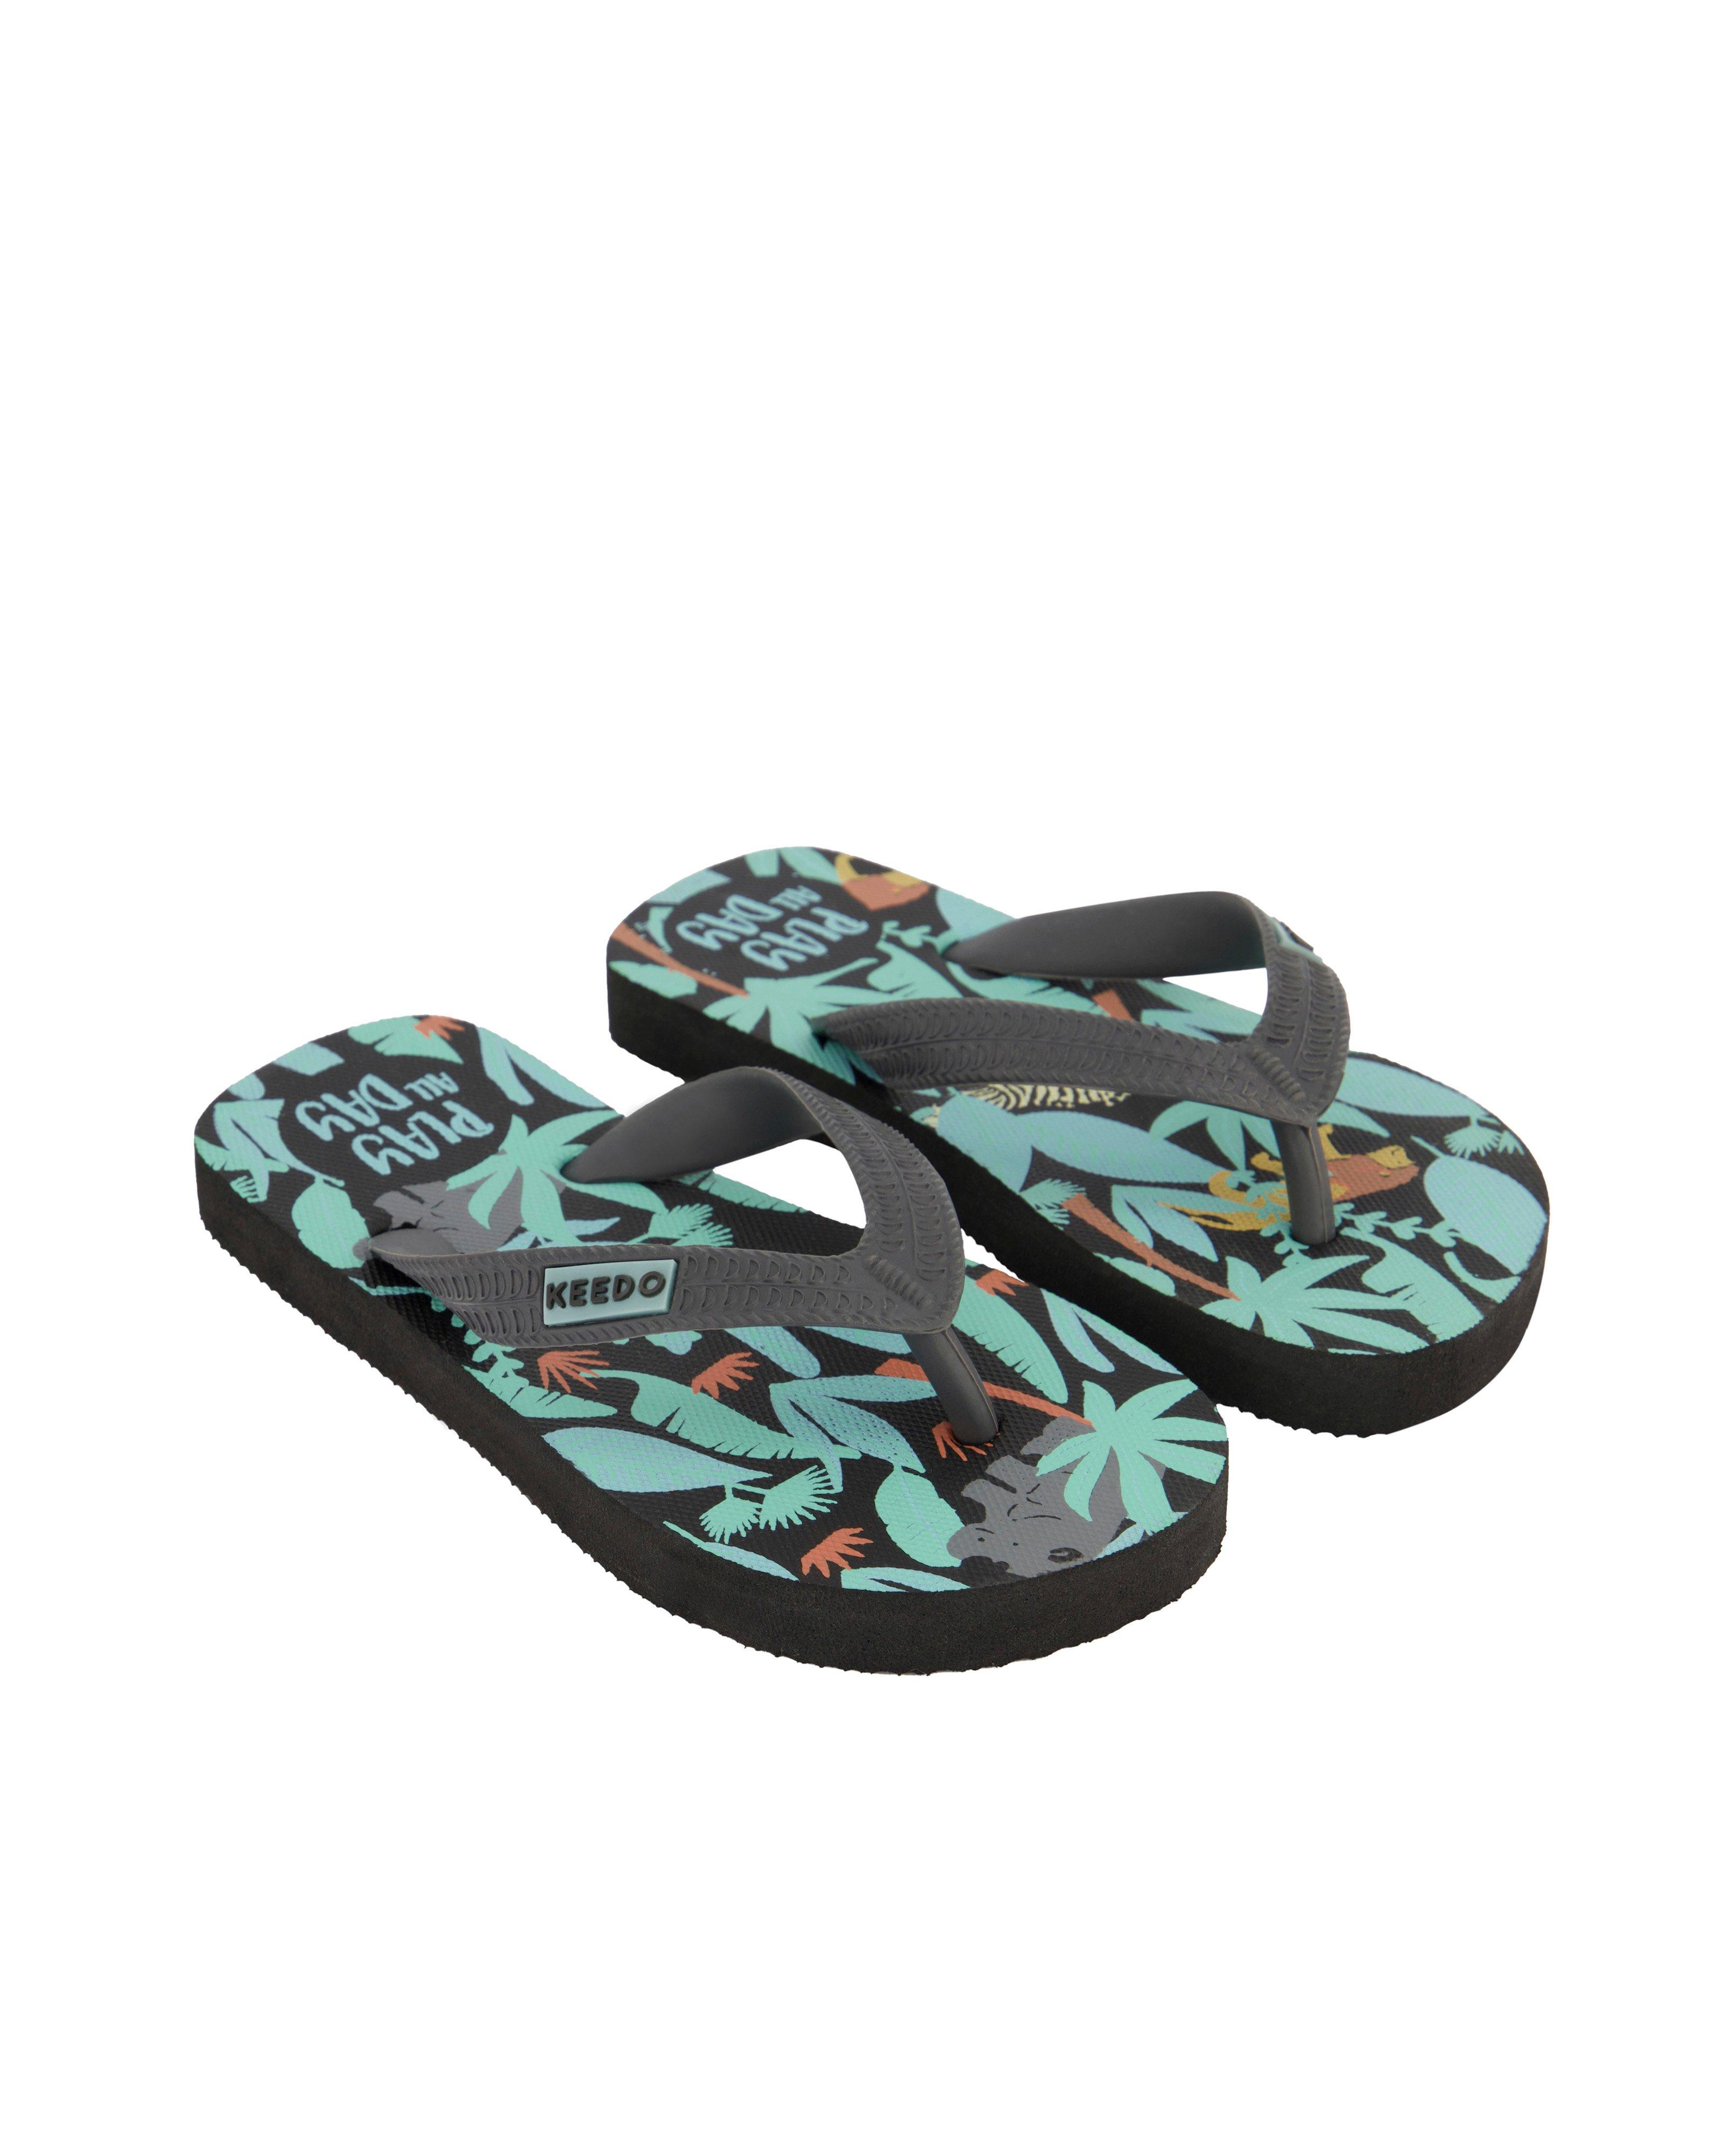 Safari Flip Flops - Keedo